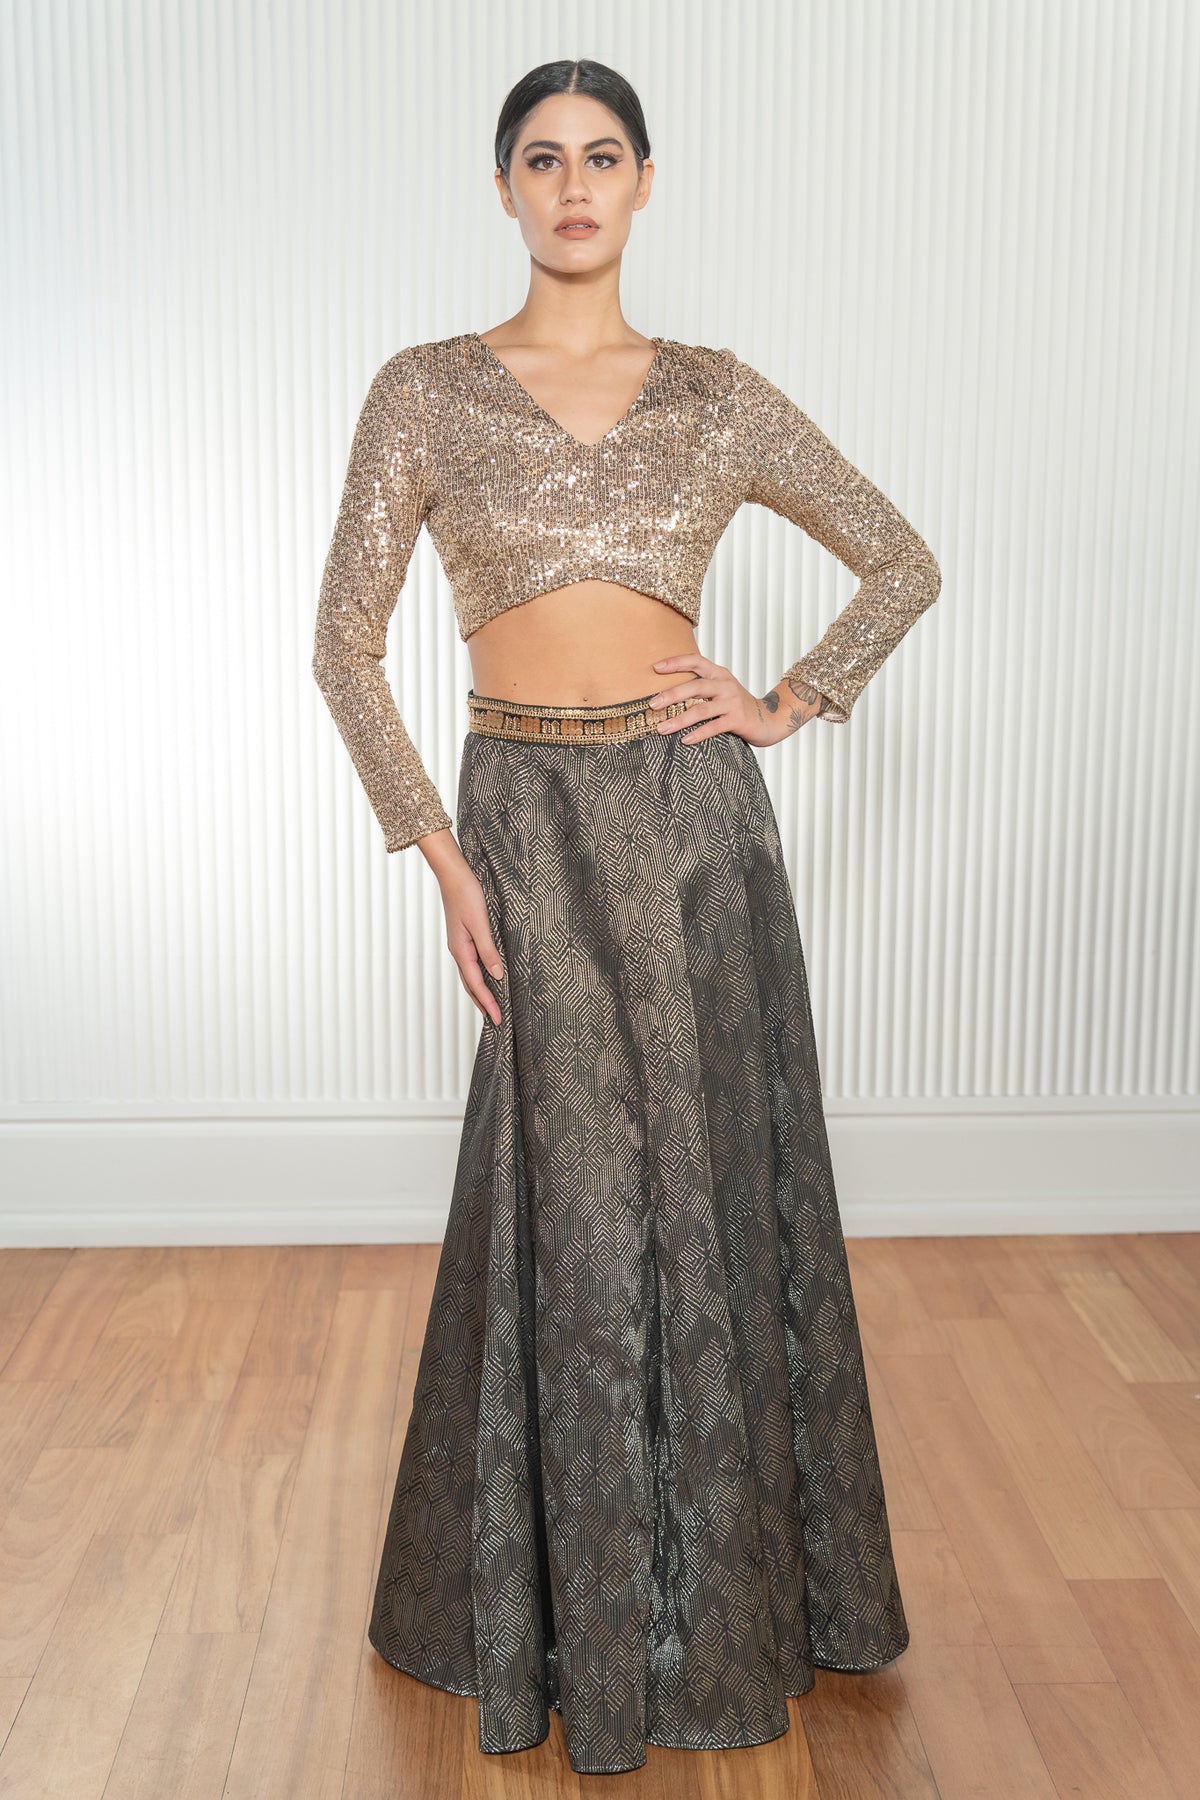 Metallic Black Diamond Maze Jacquard Lehenga Skirt with a Gold Sequin Trim on the Waist - Front View - Harleen Kaur